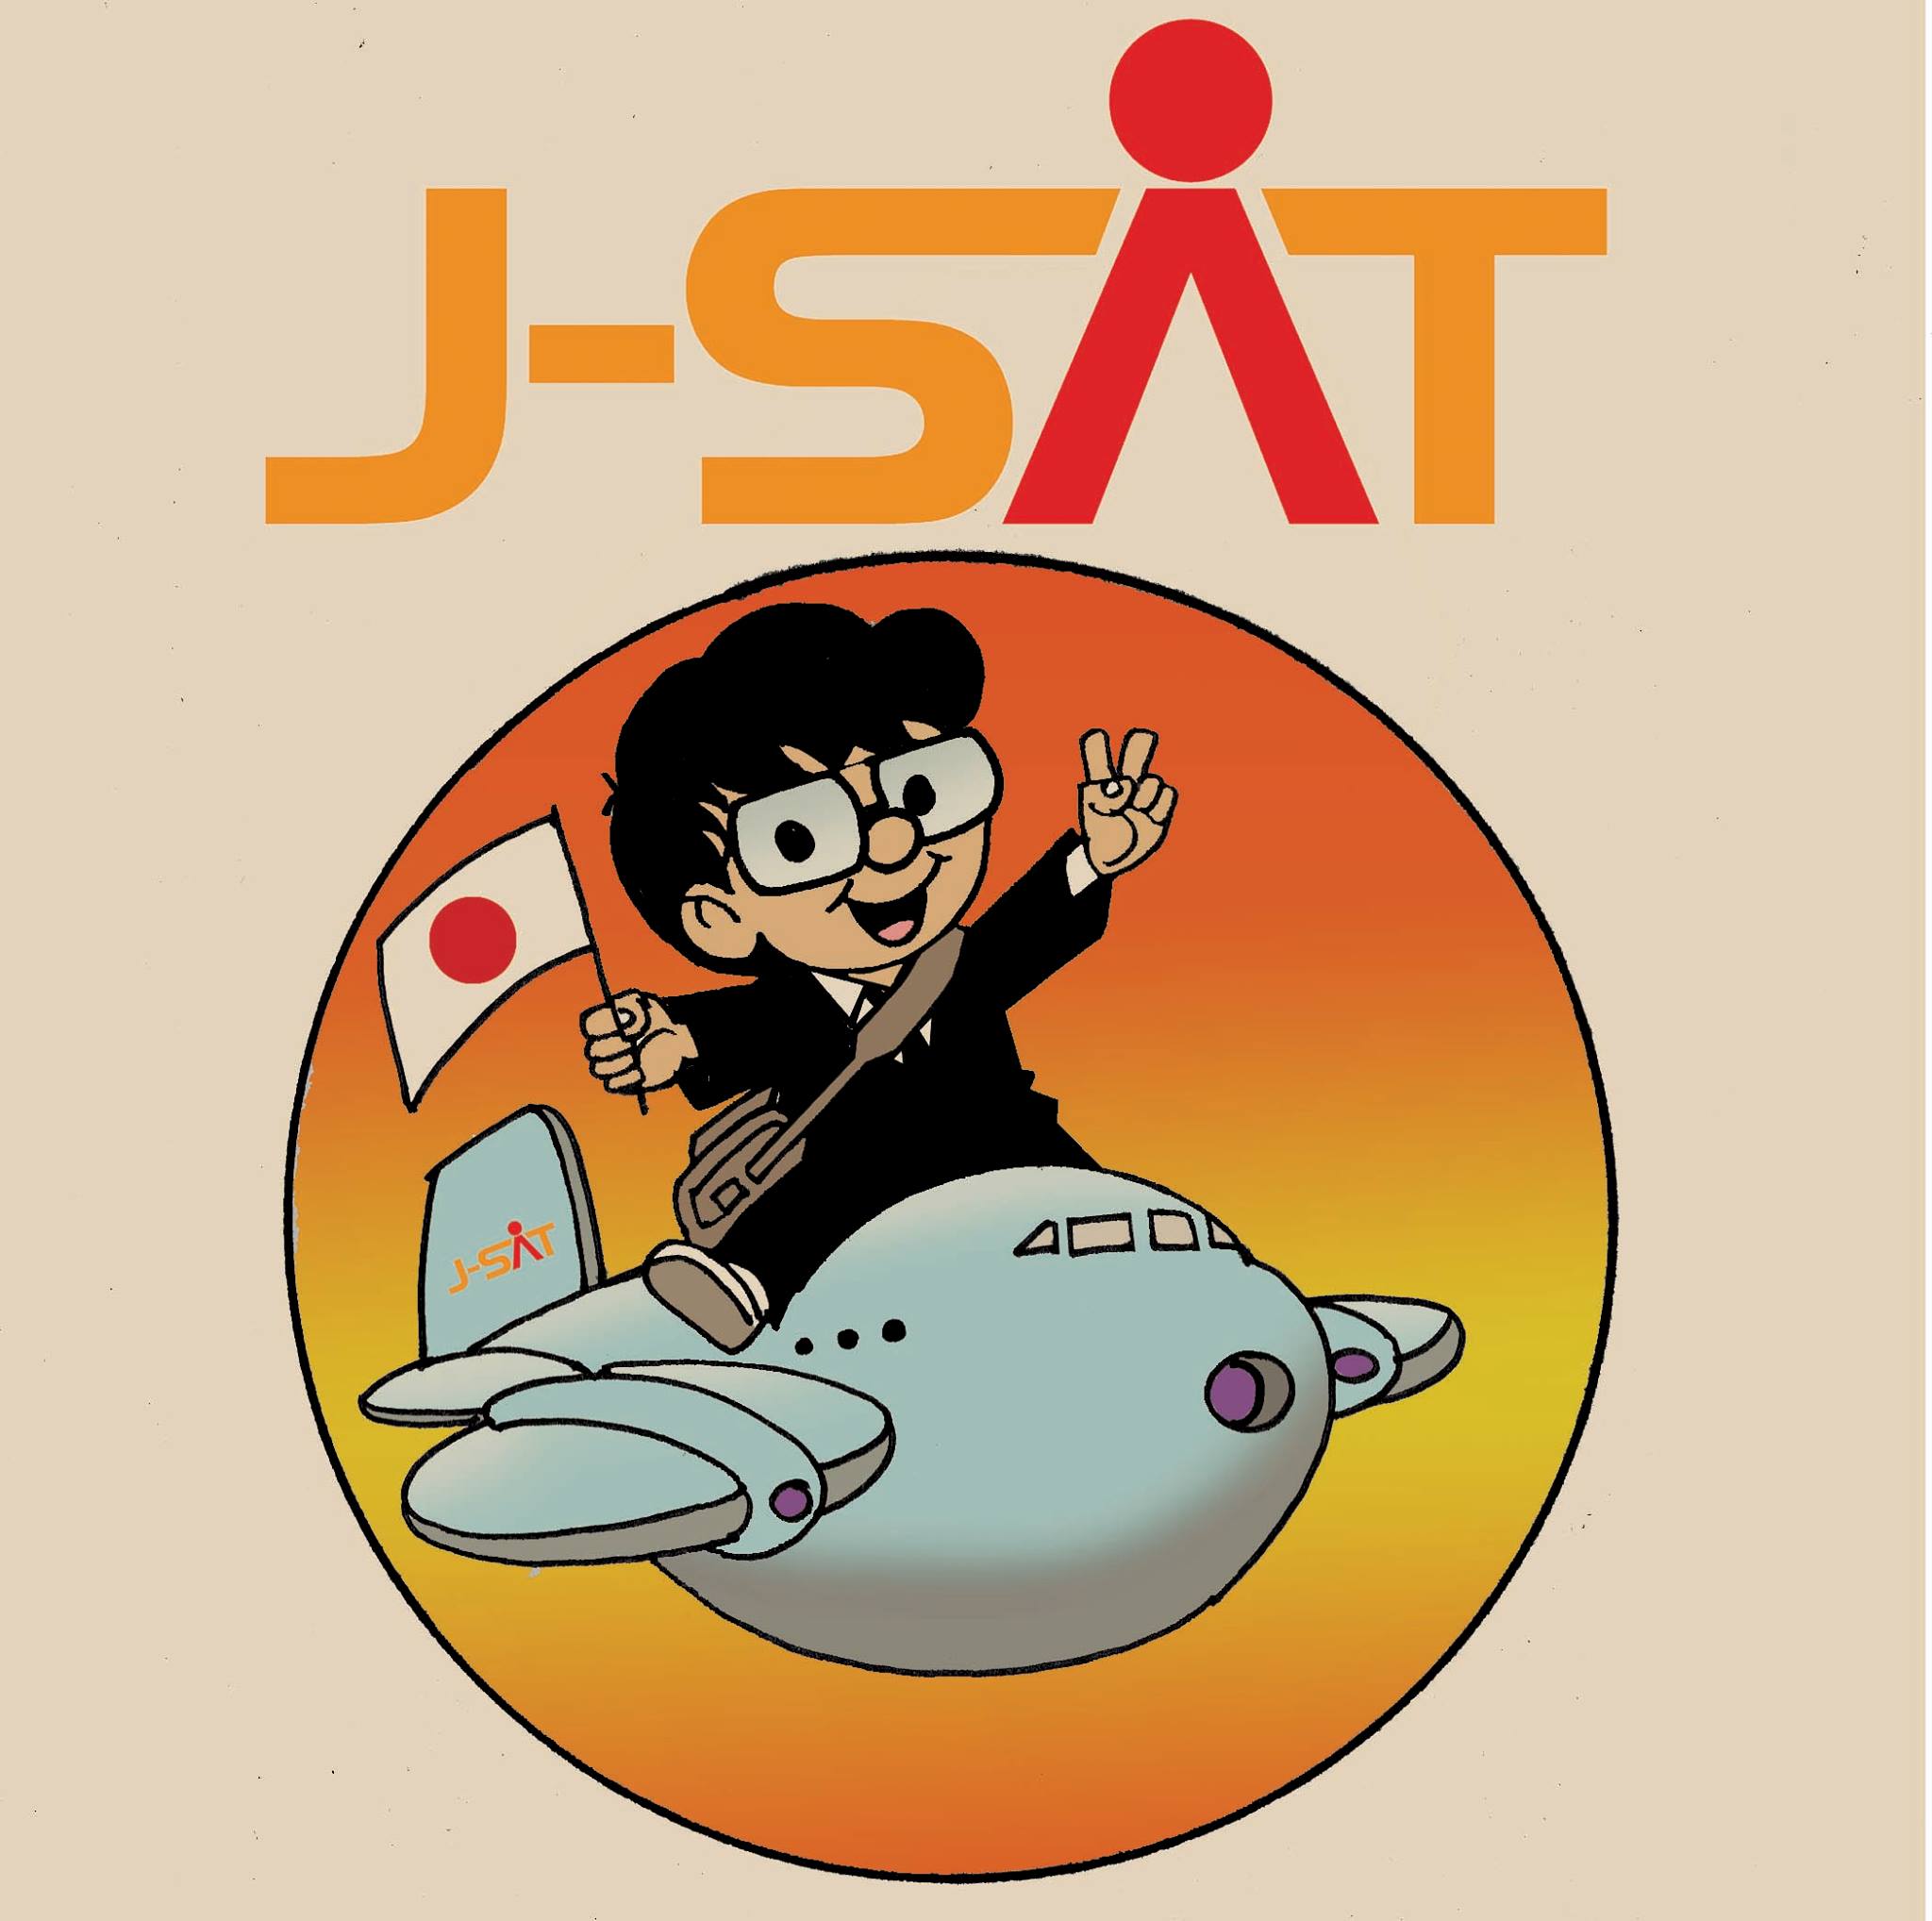 J-SAT (Recruitment Agency for Japanese Company)